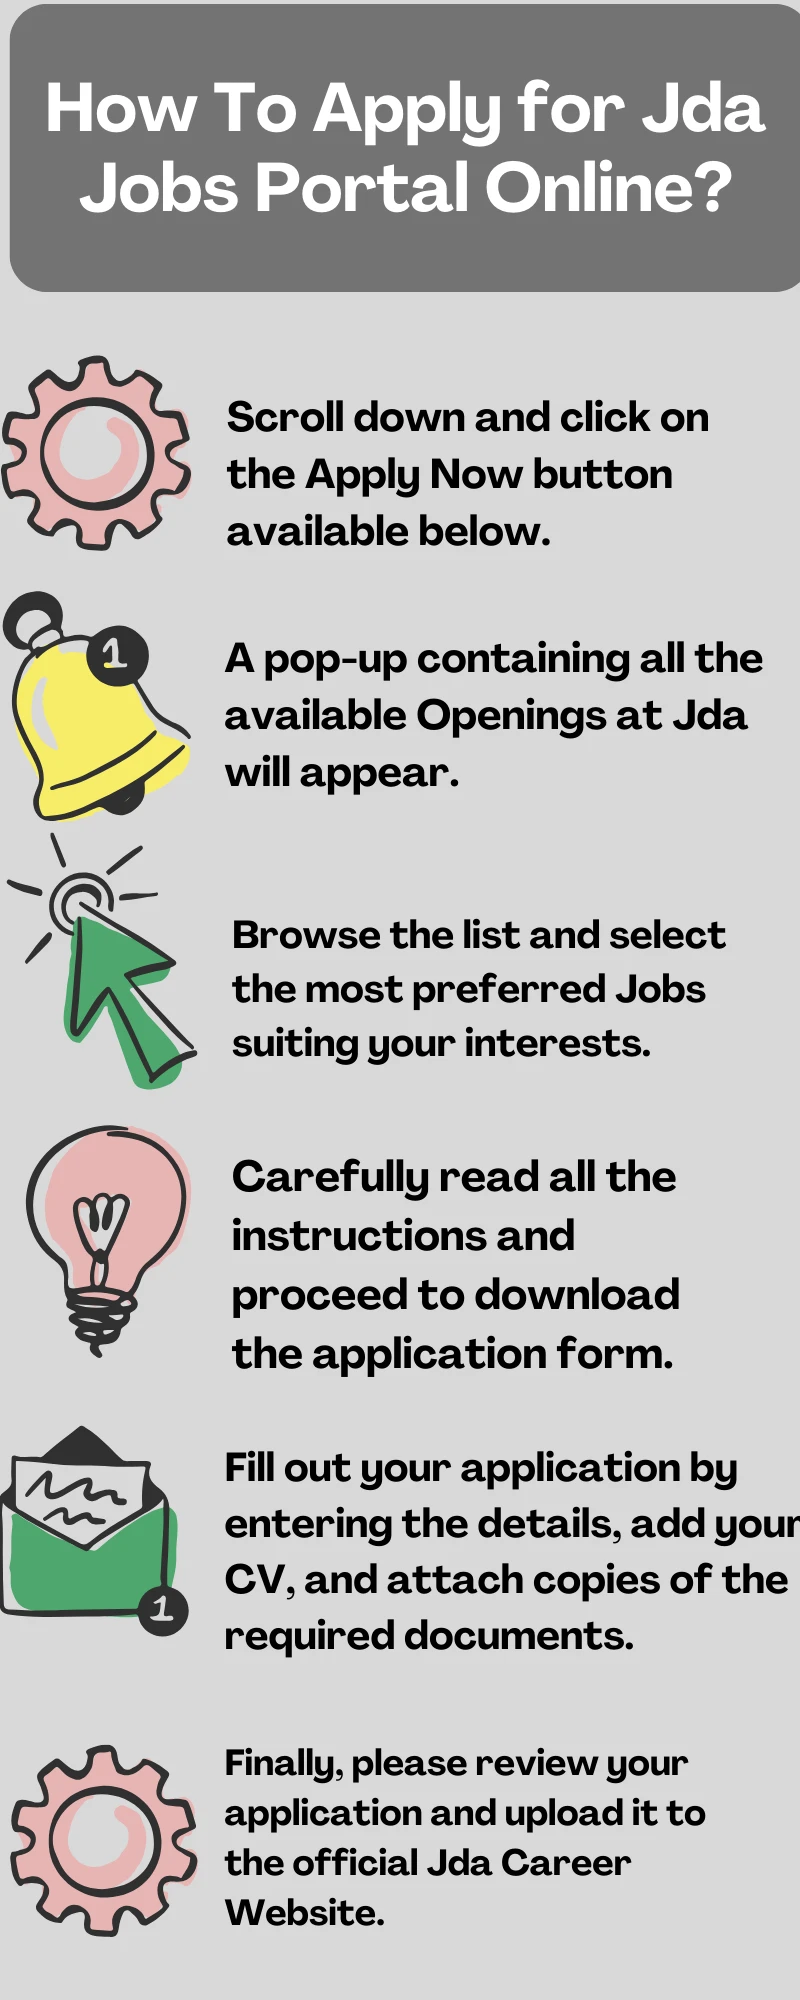 How To Apply for Jda Jobs Portal Online?